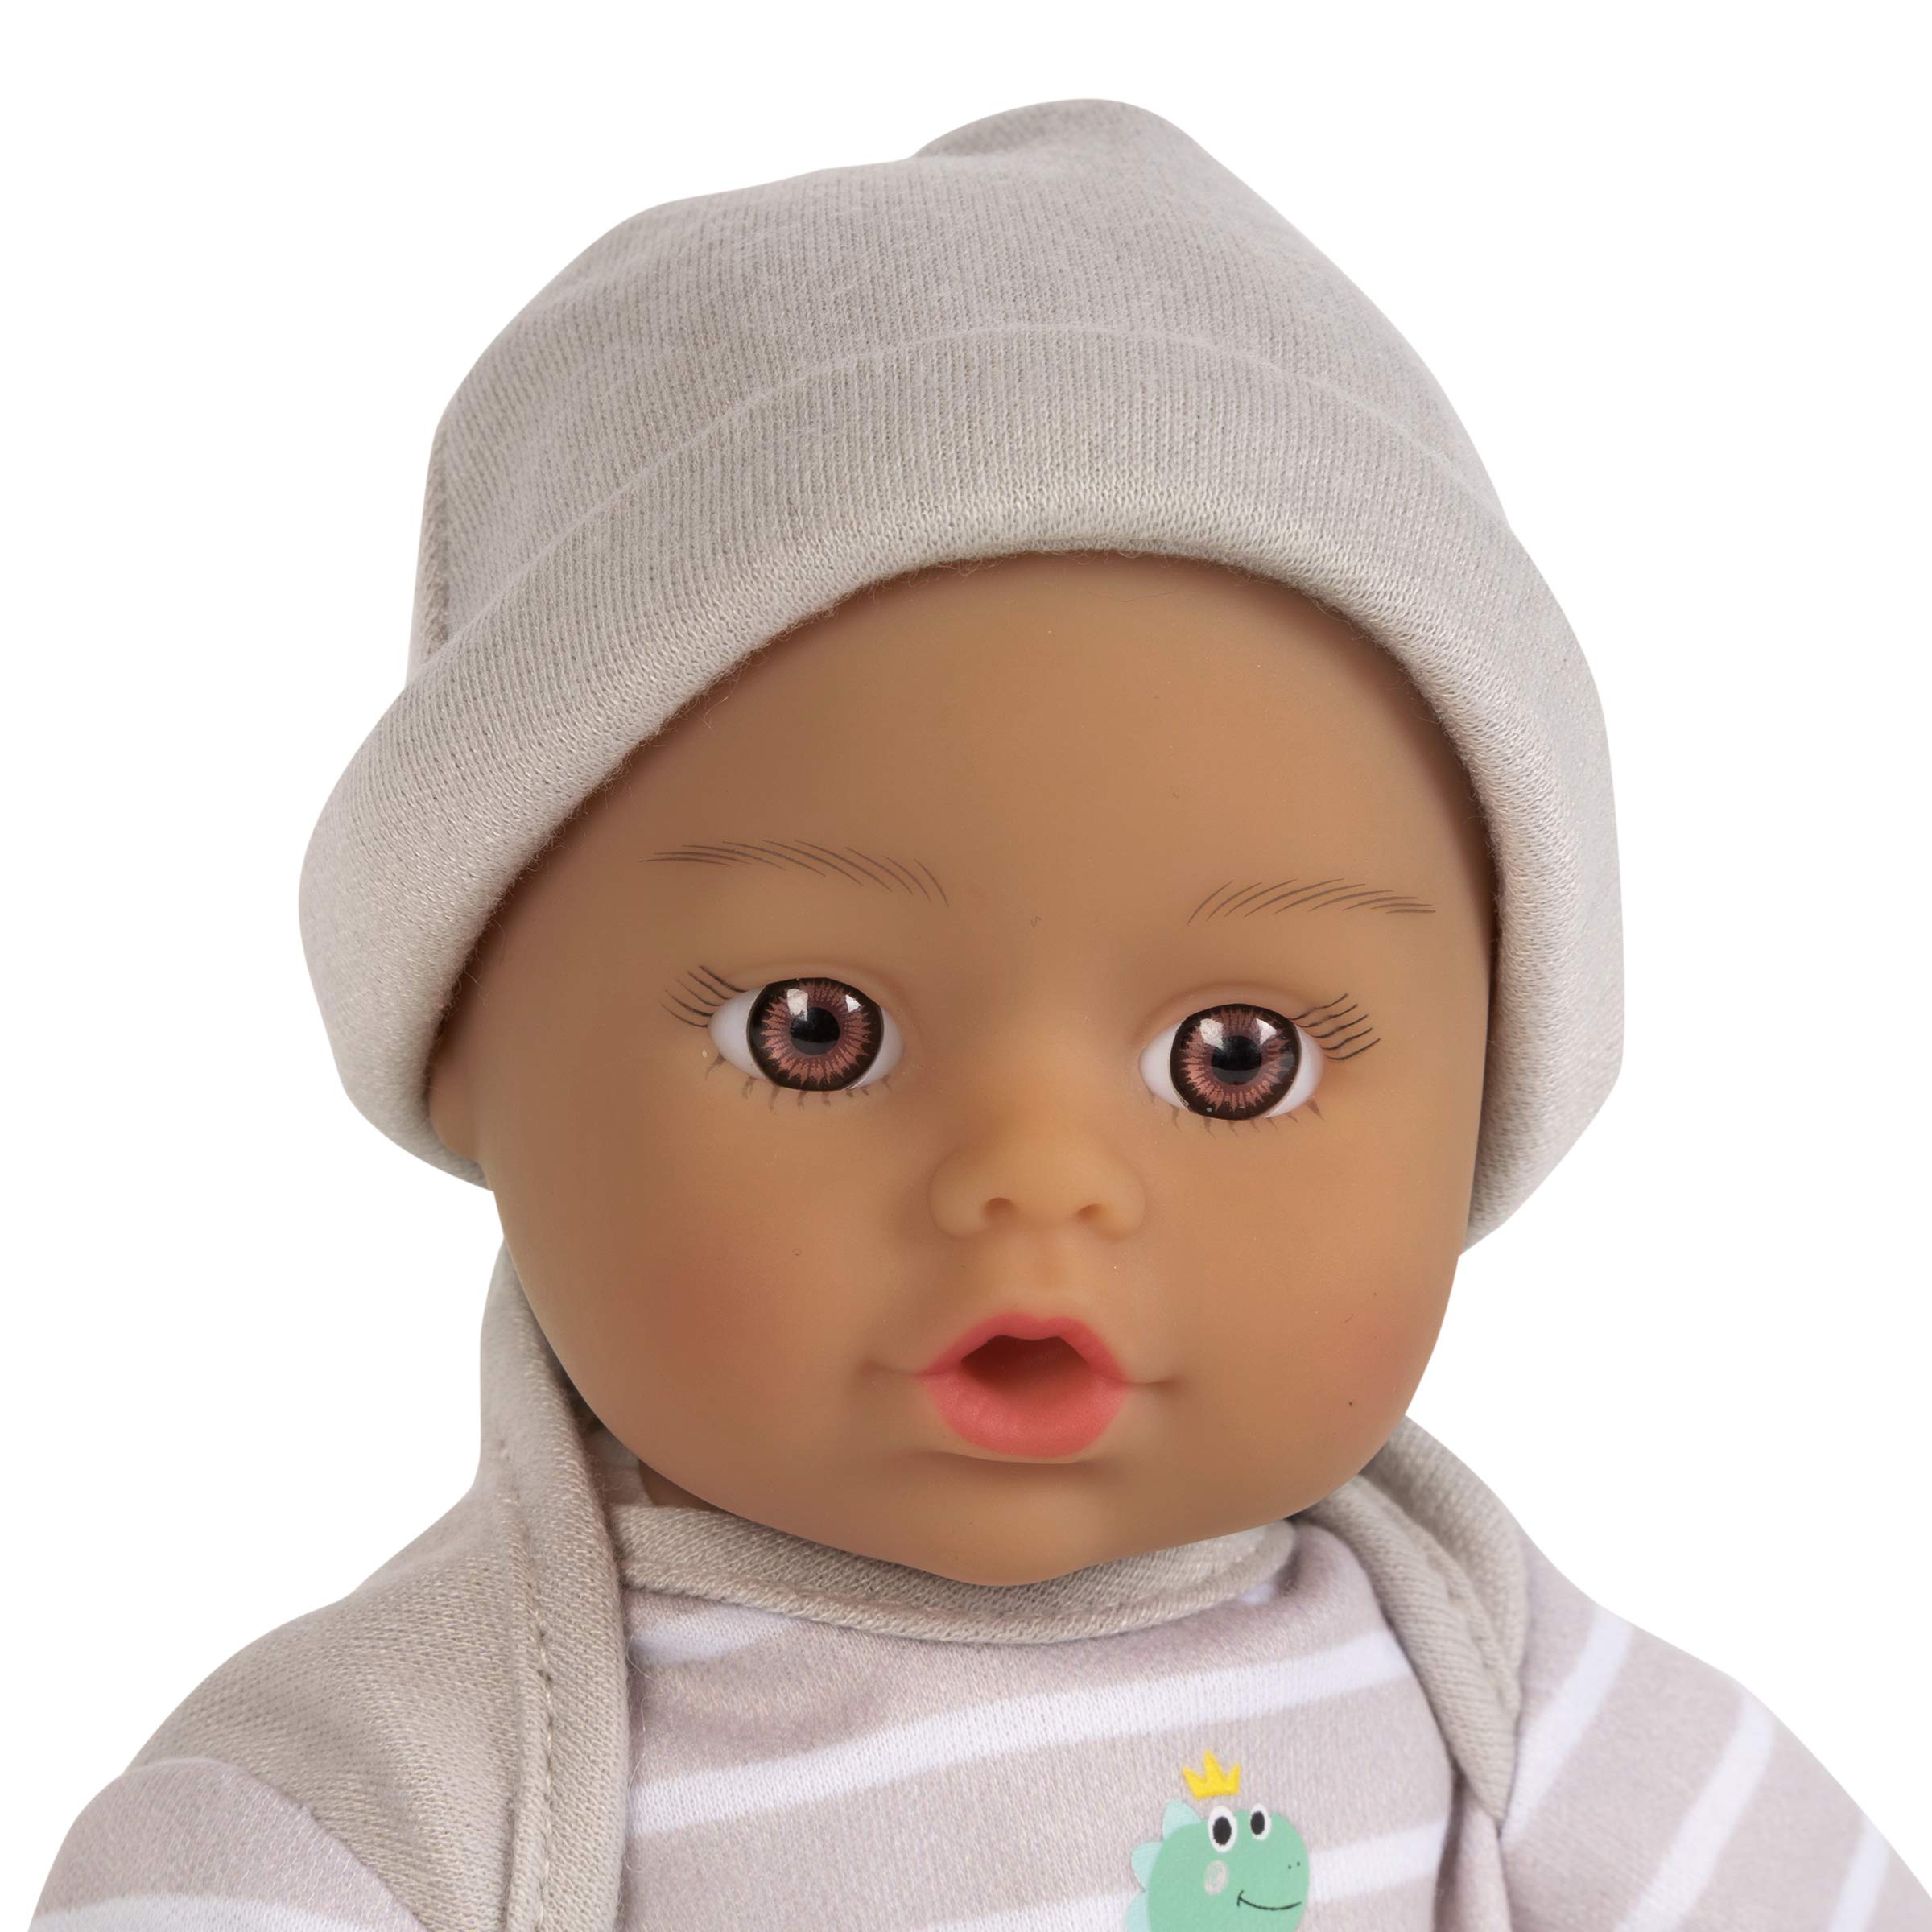 Adora Soft Baby Doll Boy, 11 inch Sweet Baby Dinosaur, Machine Washable (Amazon Exclusive) 1+